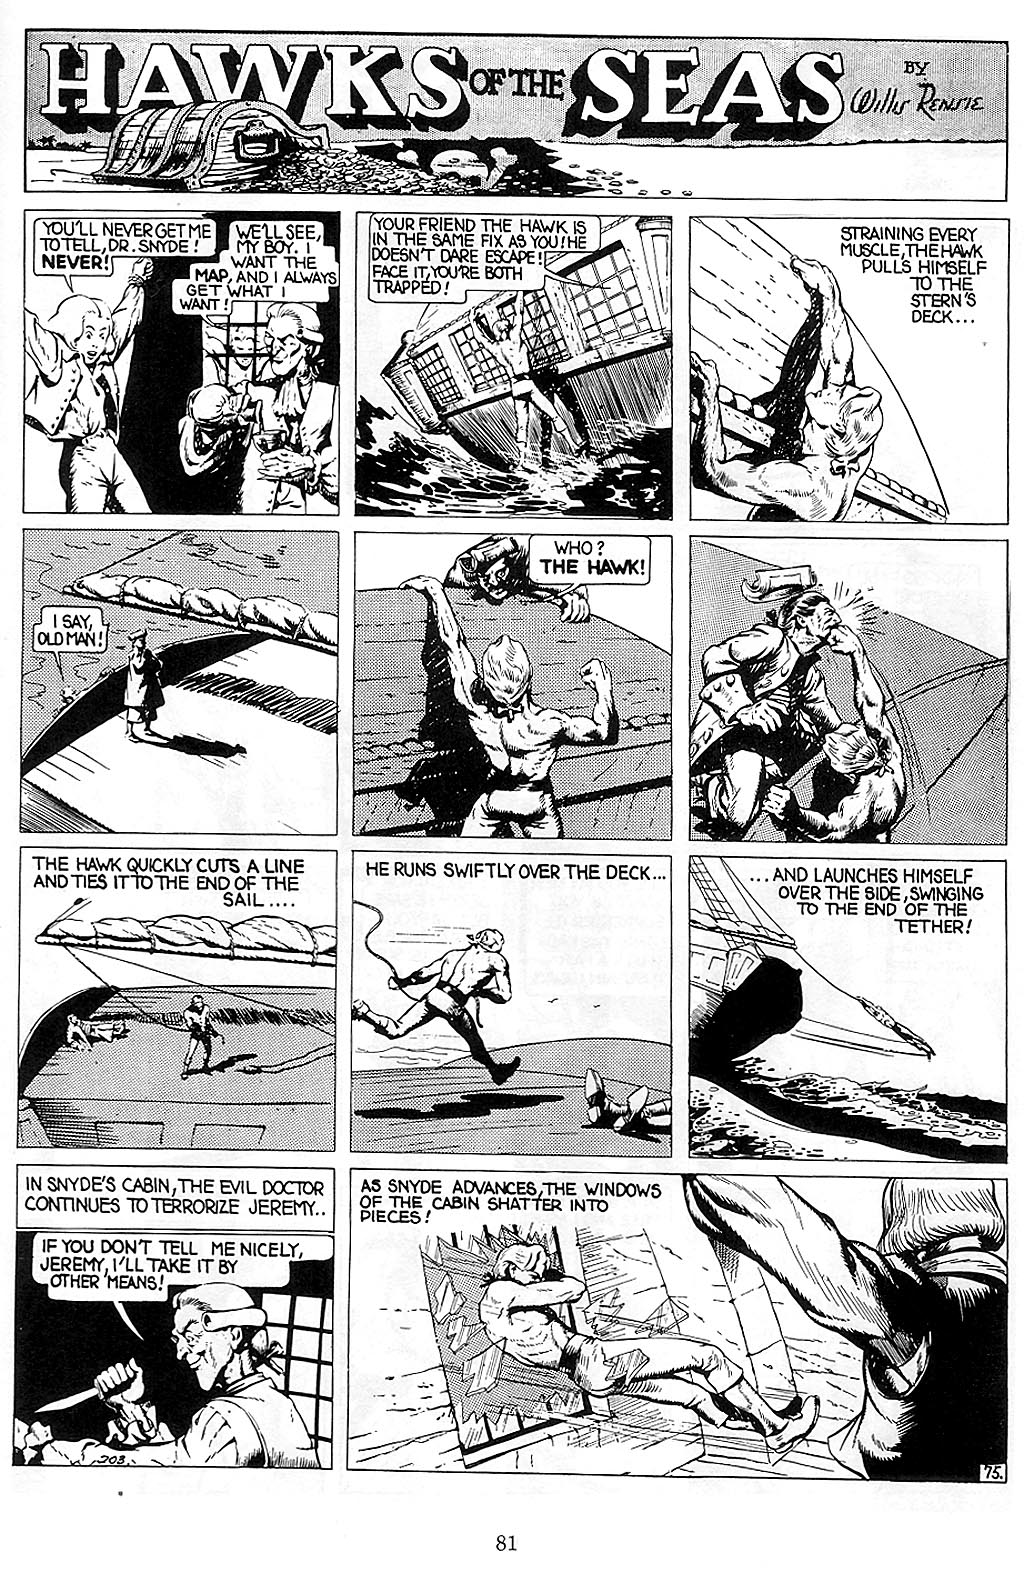 Read online Will Eisner's Hawks of the Seas comic -  Issue # TPB - 82